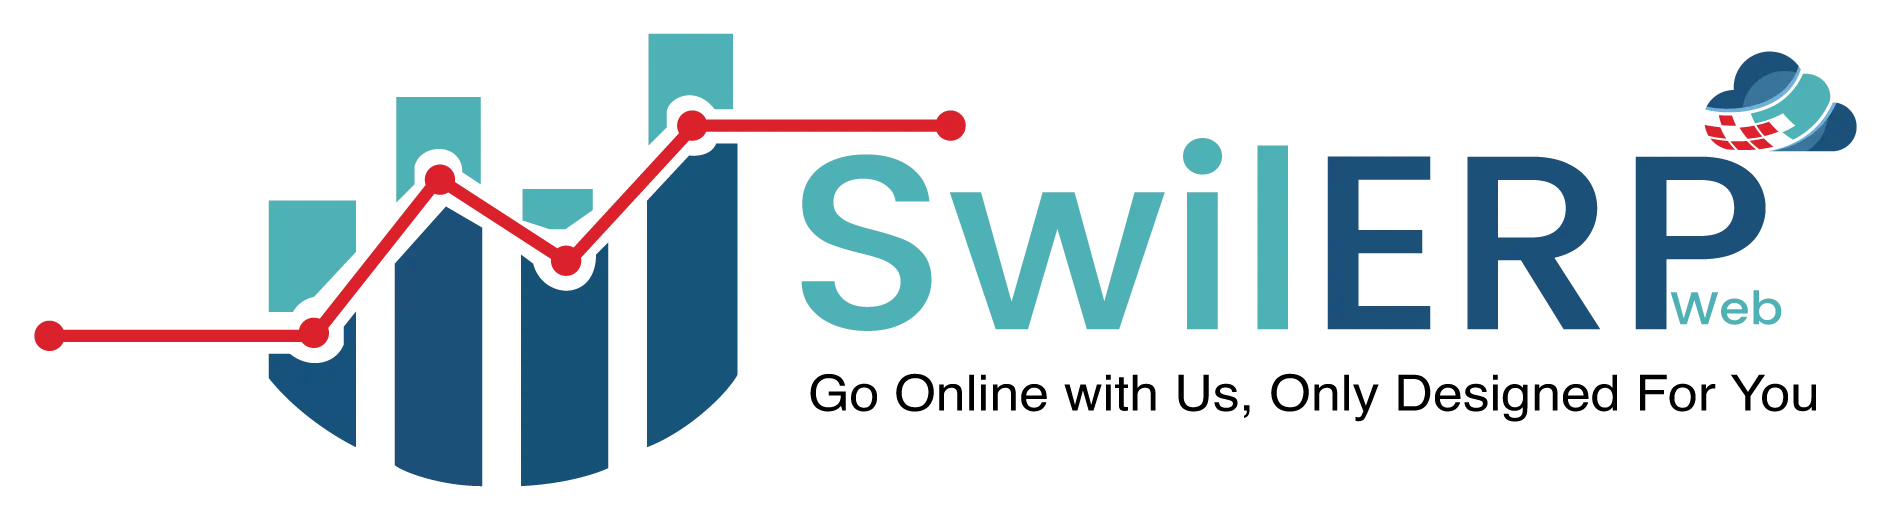 SwilERP web logo.